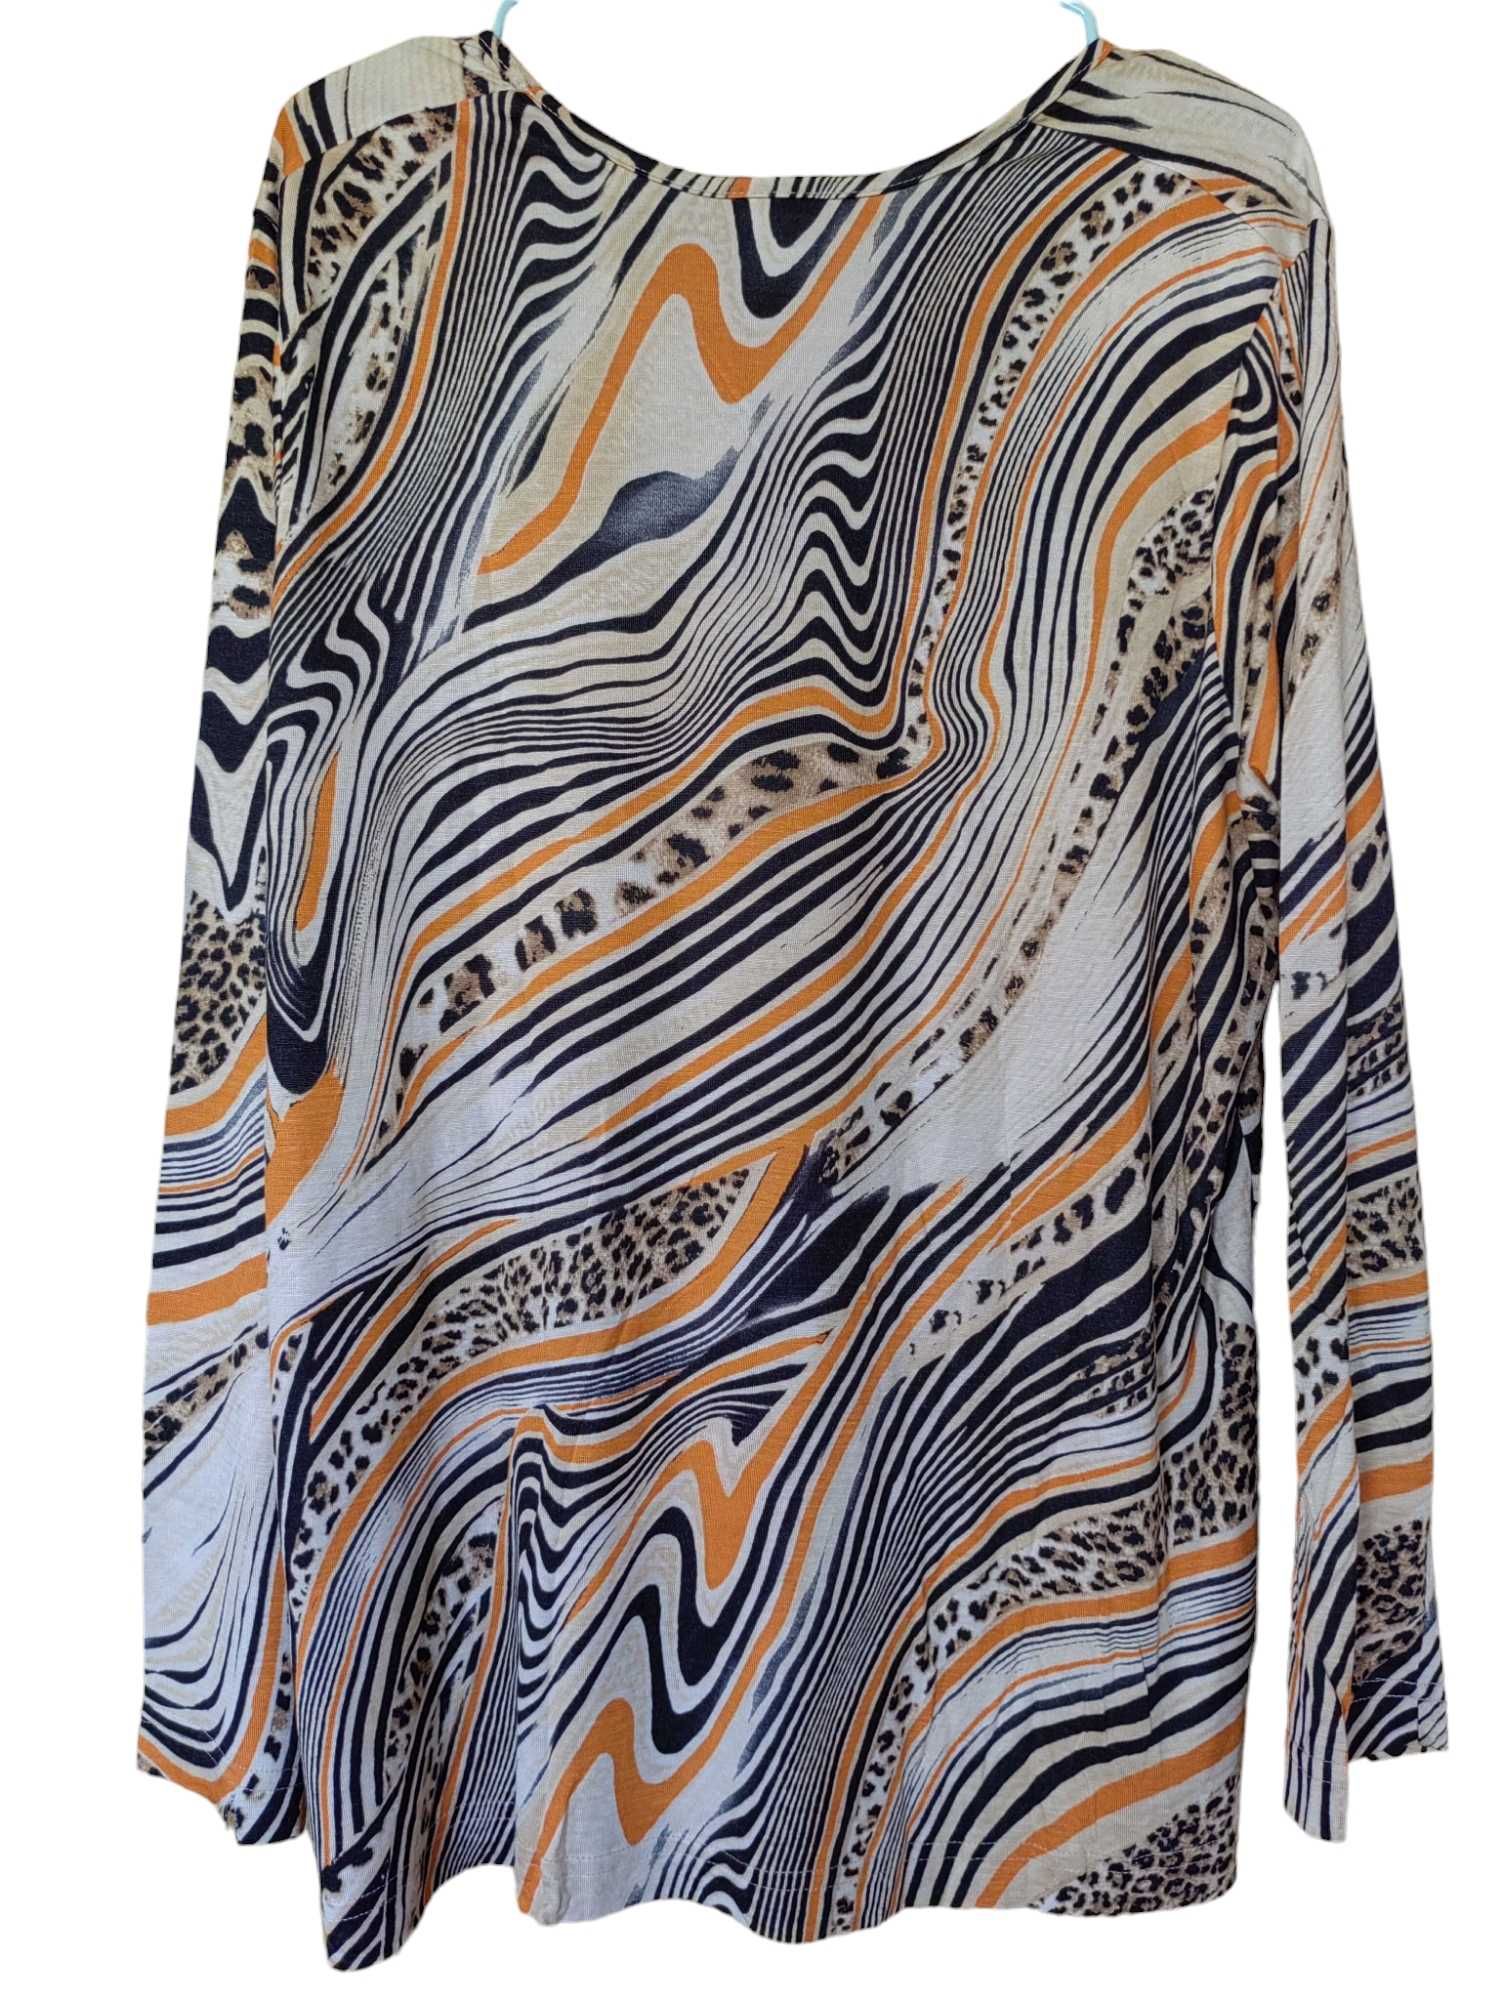 Дамска блуза с абстрактна щампа M&S Mode, 100% вискоза, 75х66 см, XXL